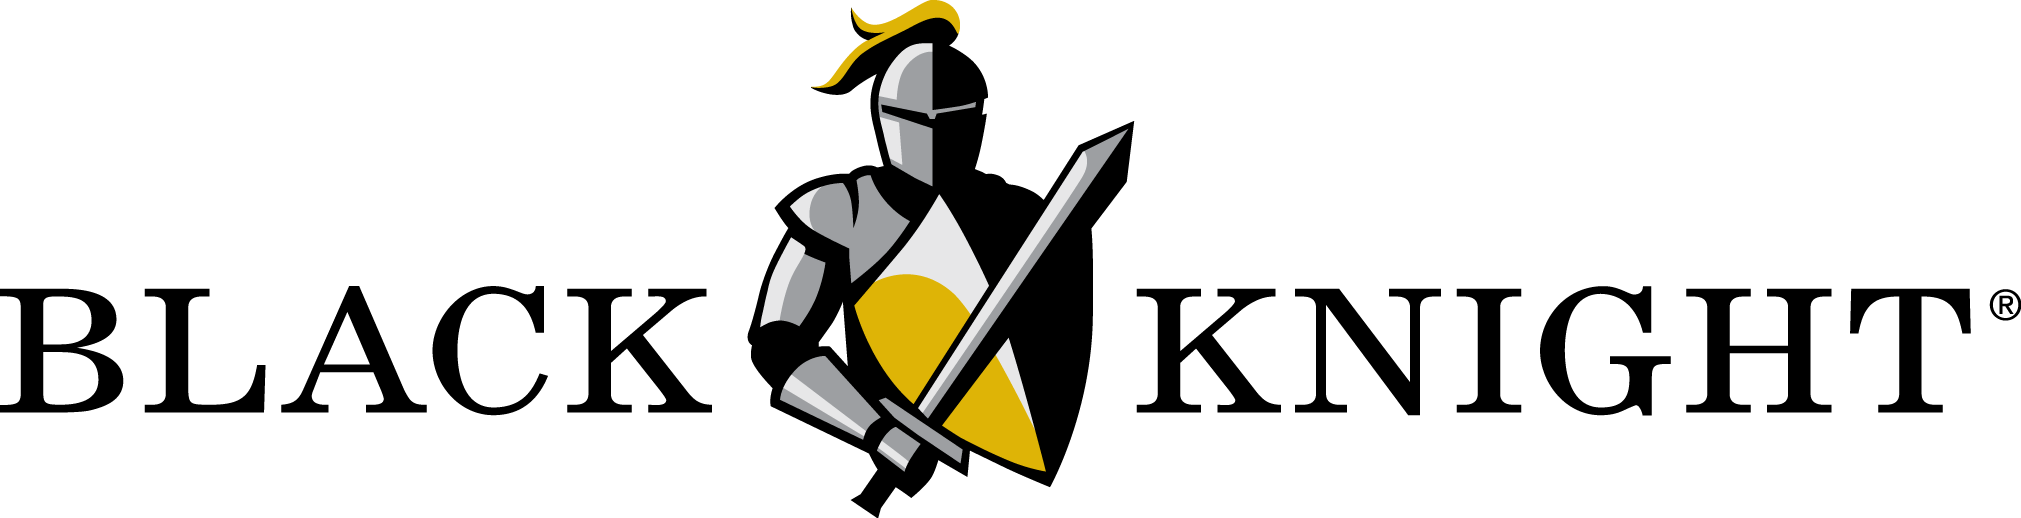 Black Knight Logo 